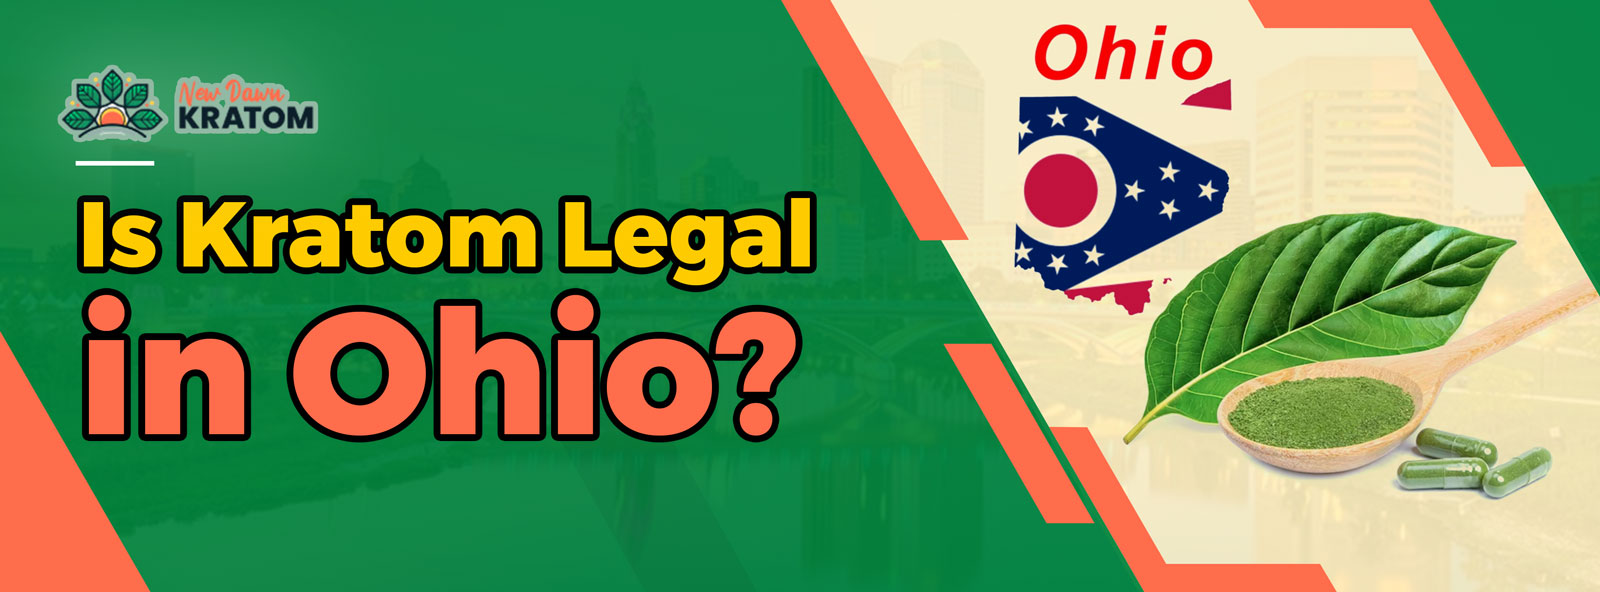 Is Kratom Legal in Ohio?